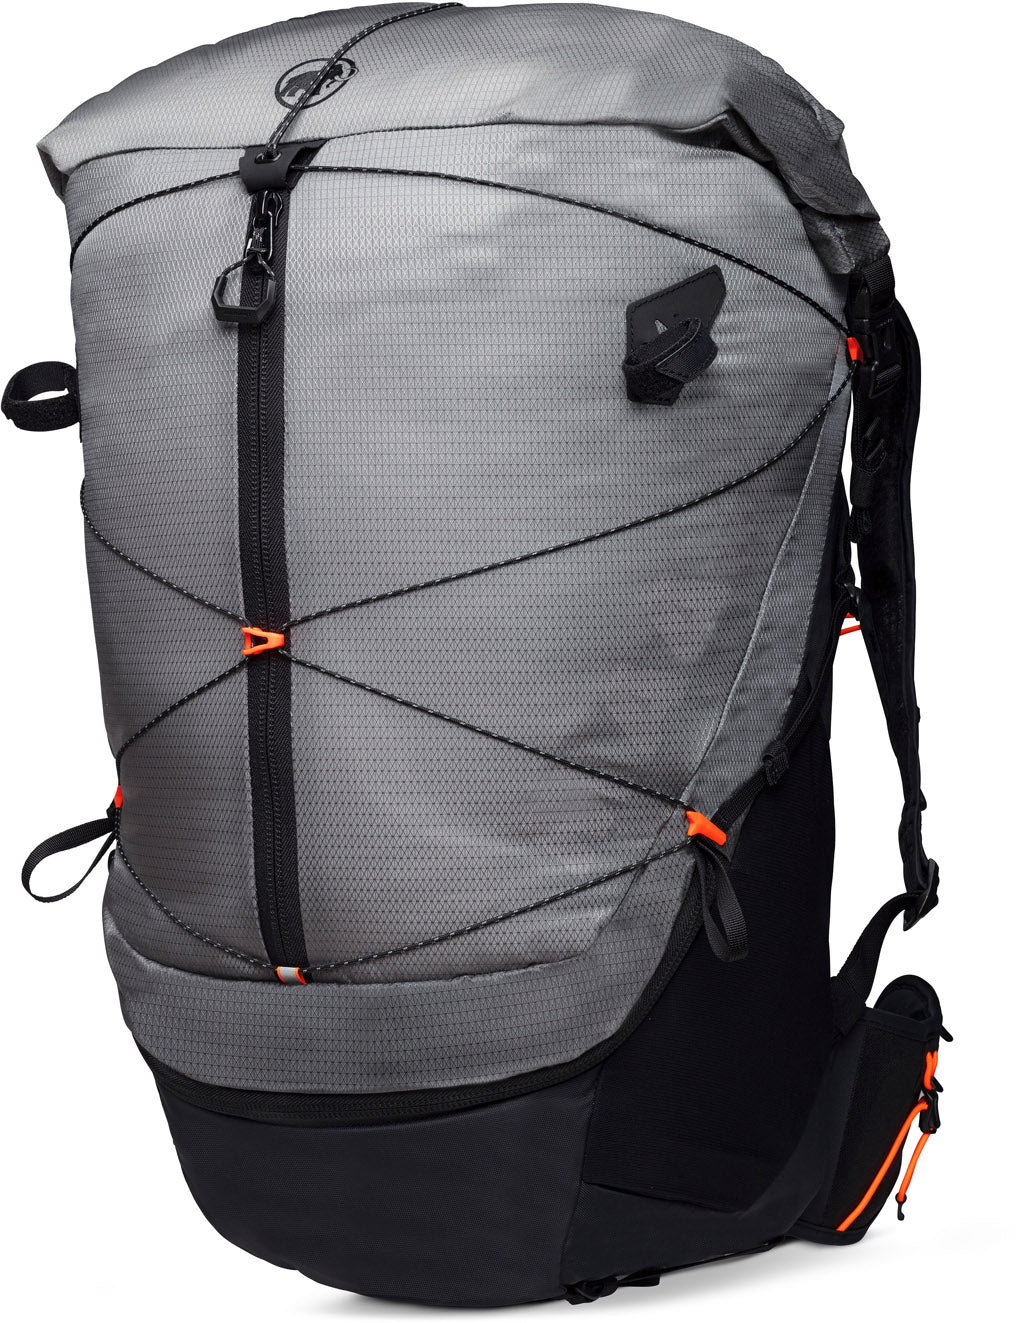 Mammut Ducan Spine 50-60L Backpack - Women's